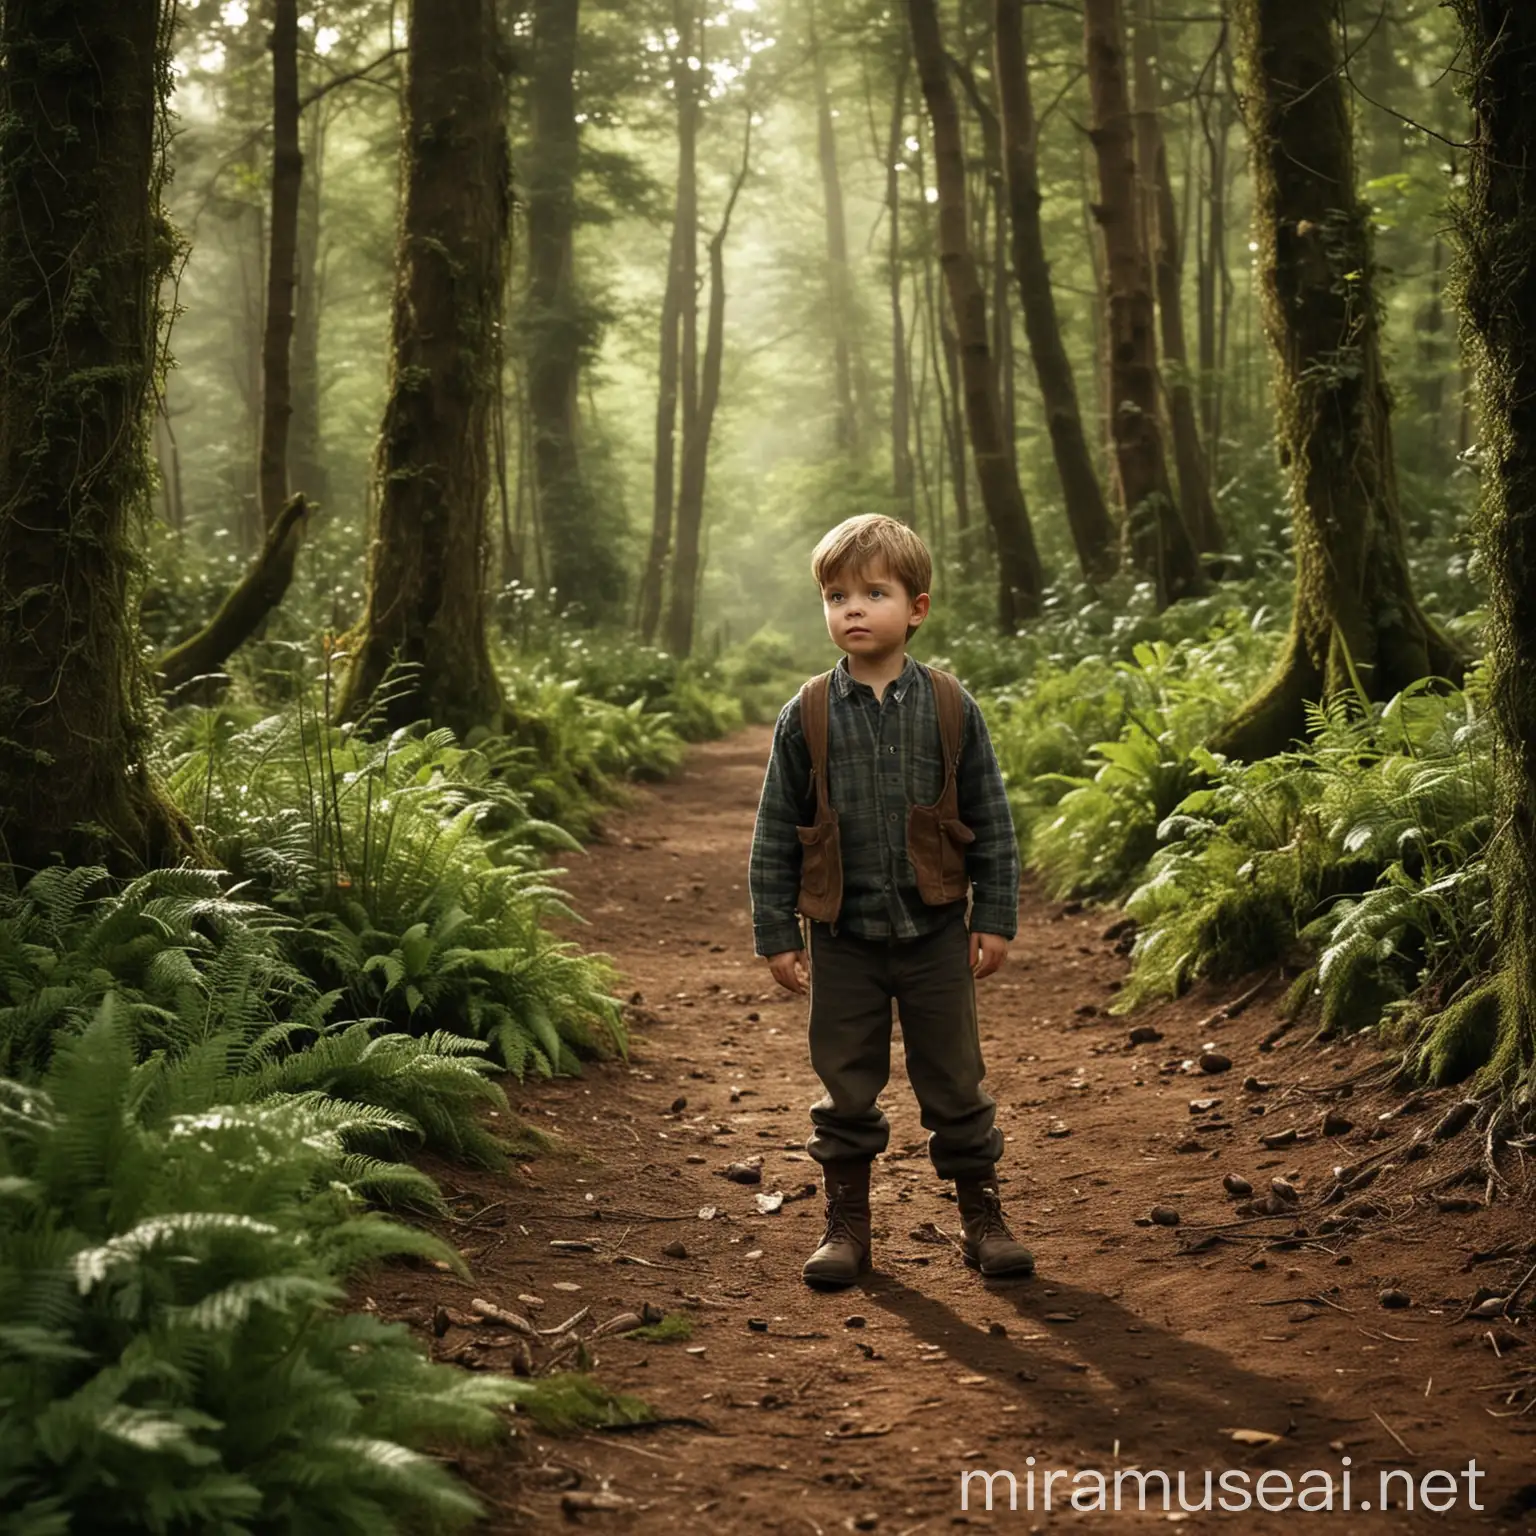 Curious Boy Oliver Exploring Forest Village